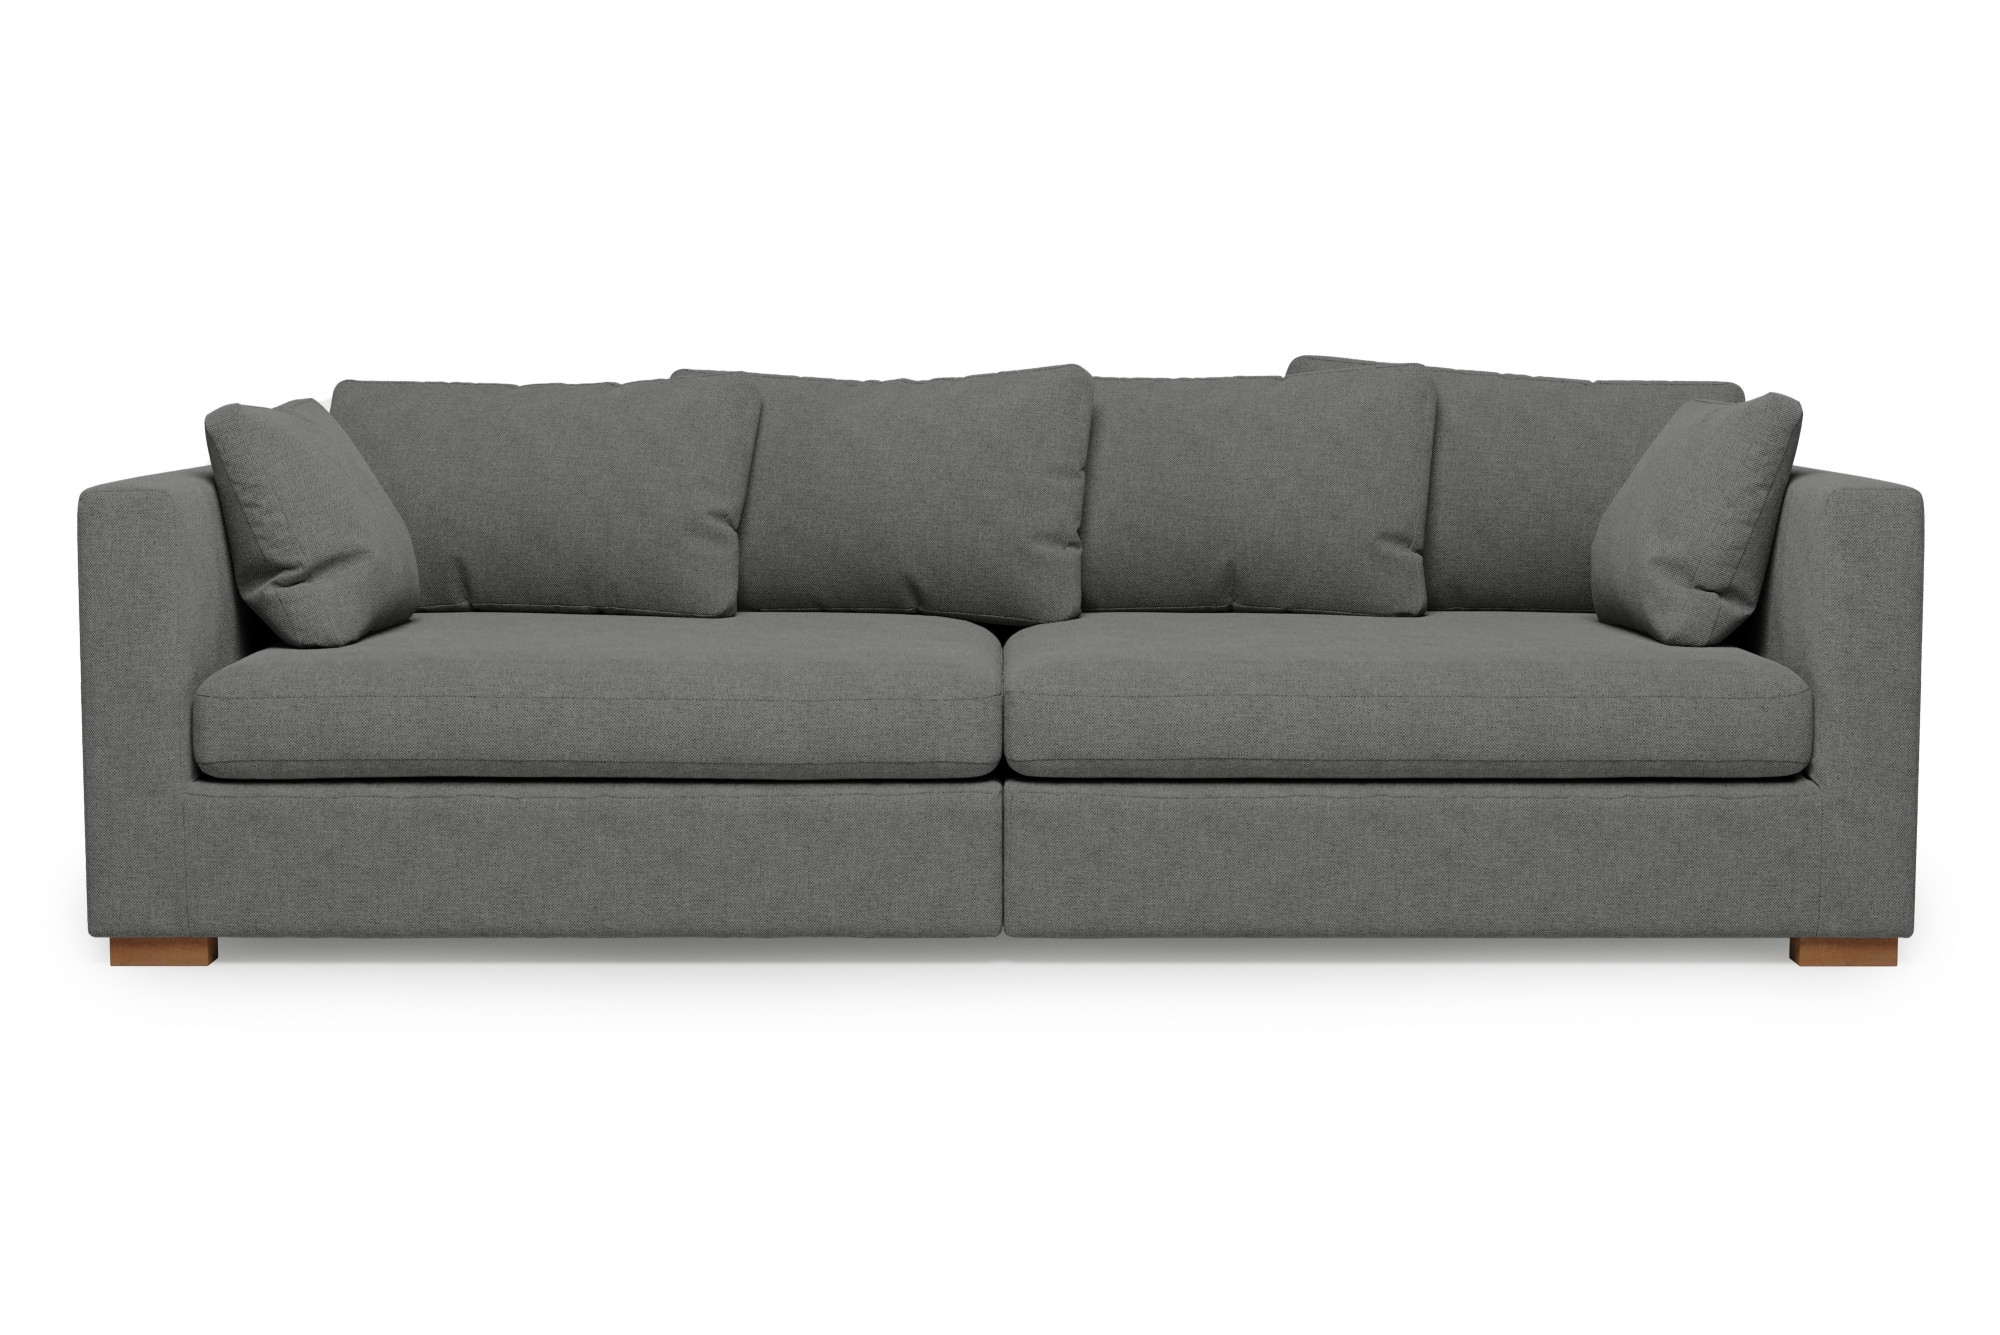 Guido Maria Kretschmer Home&Living Big-Sofa »Arles«, extra tiefe Sitzfläche, in diversen Stoffqualitäten